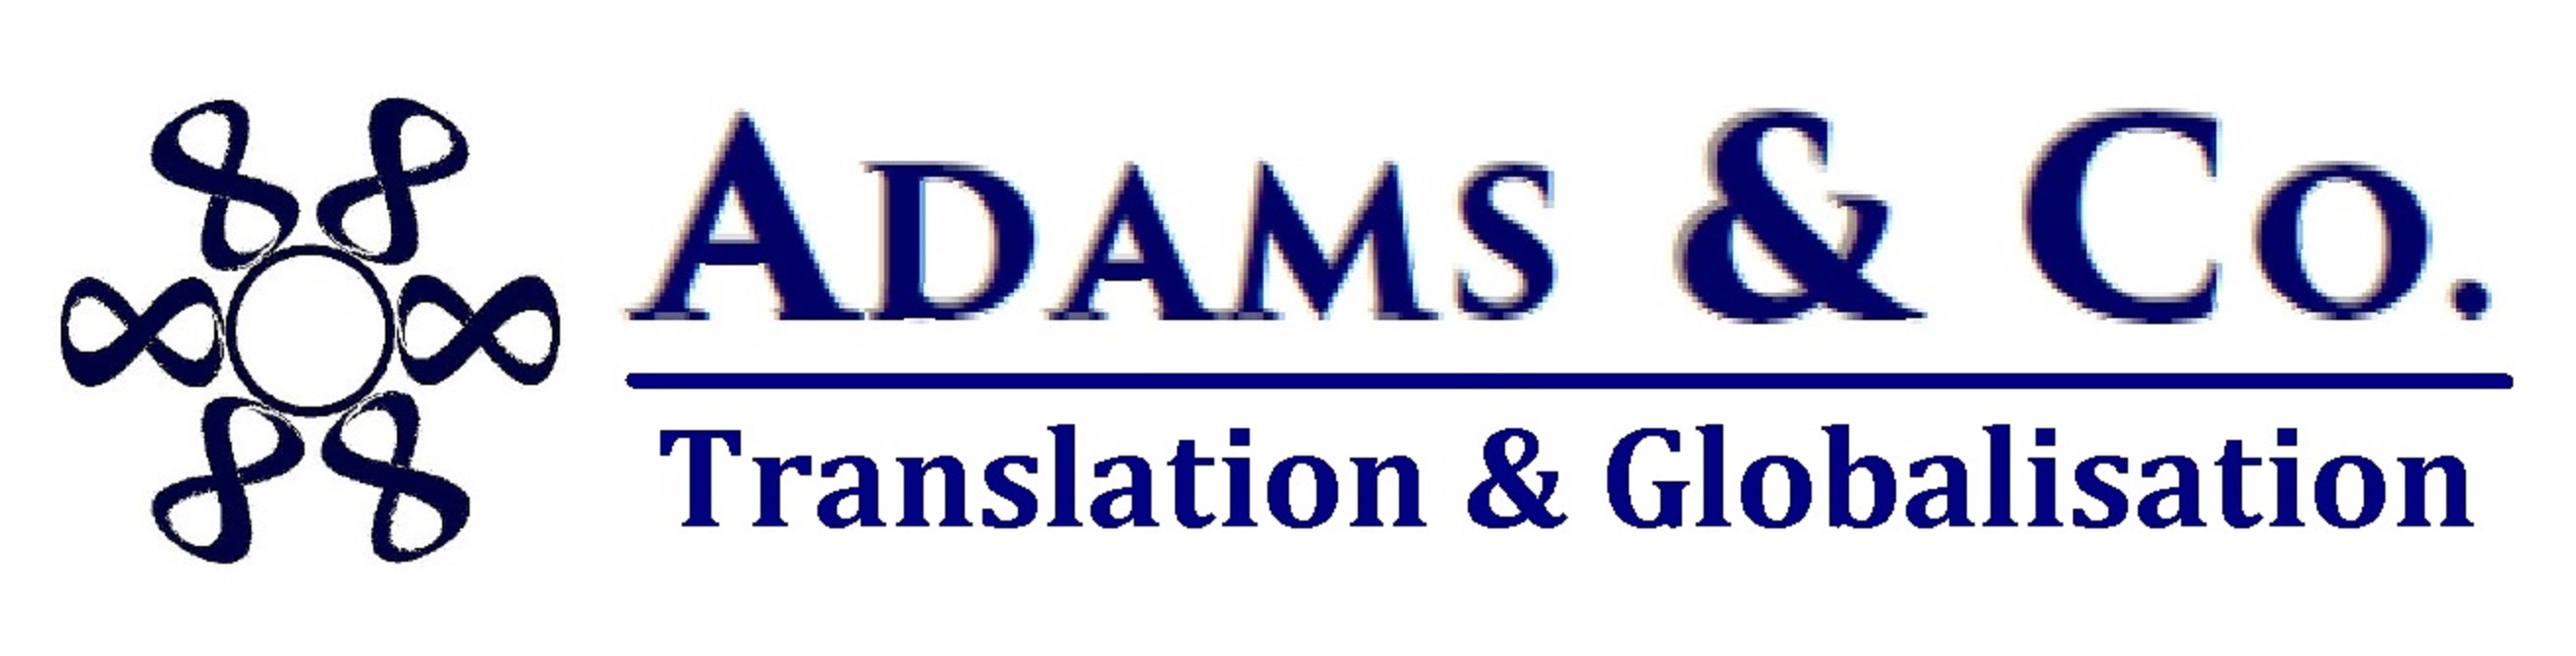 Adams & Co. serve the world from Hong Kong